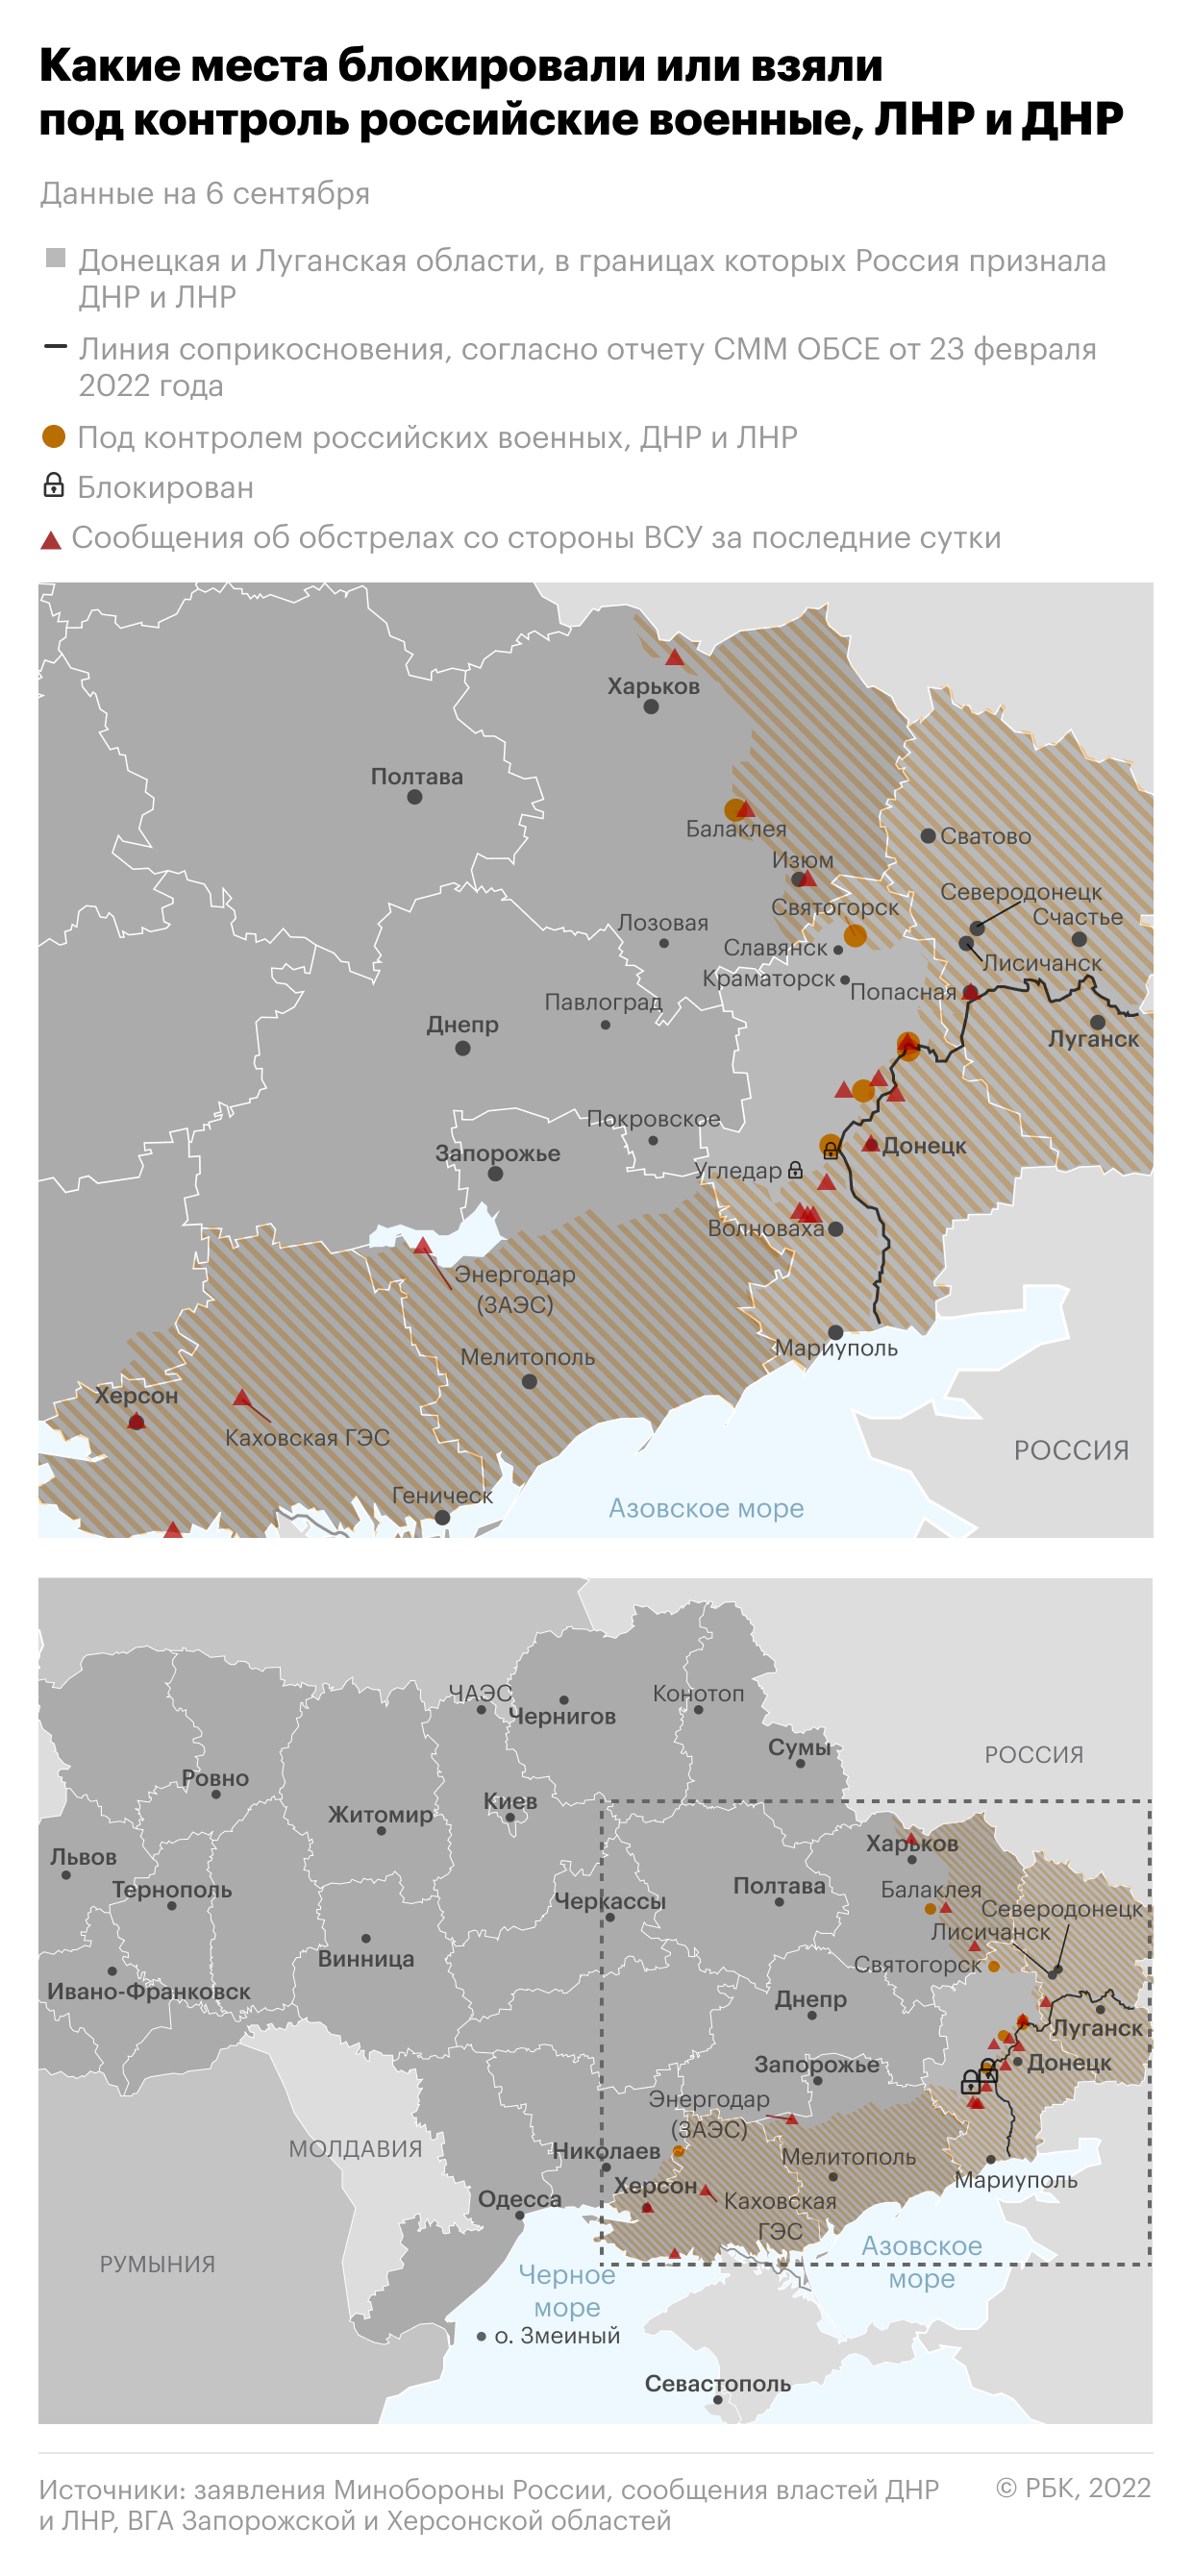 Путин заявил, что доверяет отчету МАГАТЭ по ситуации на Запорожской АЭС"/>













